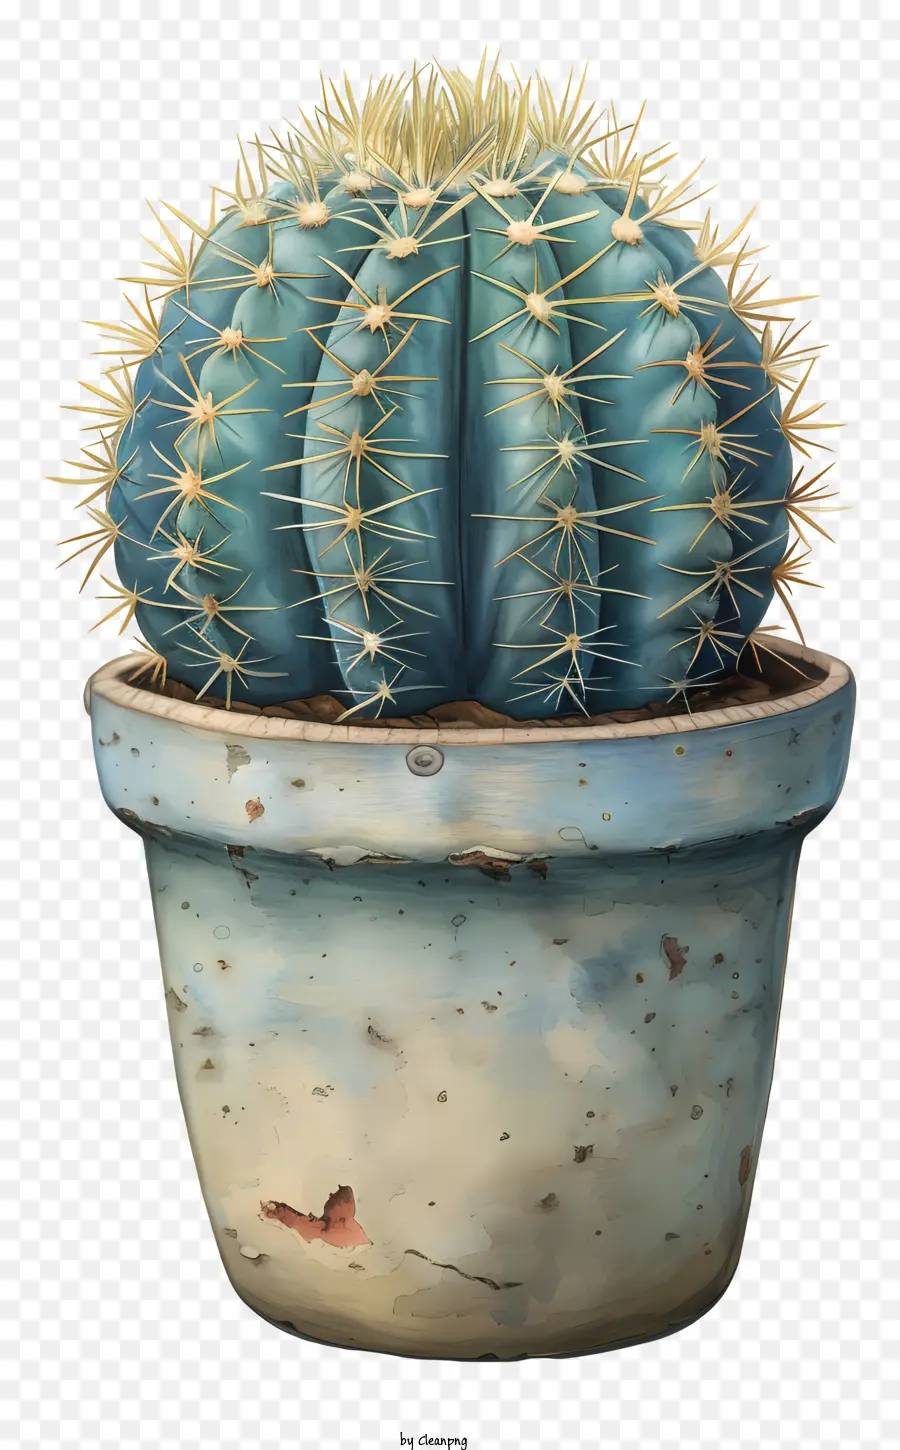 cactus - Piccolo cactus in pentola di argilla, stile ad acquerello